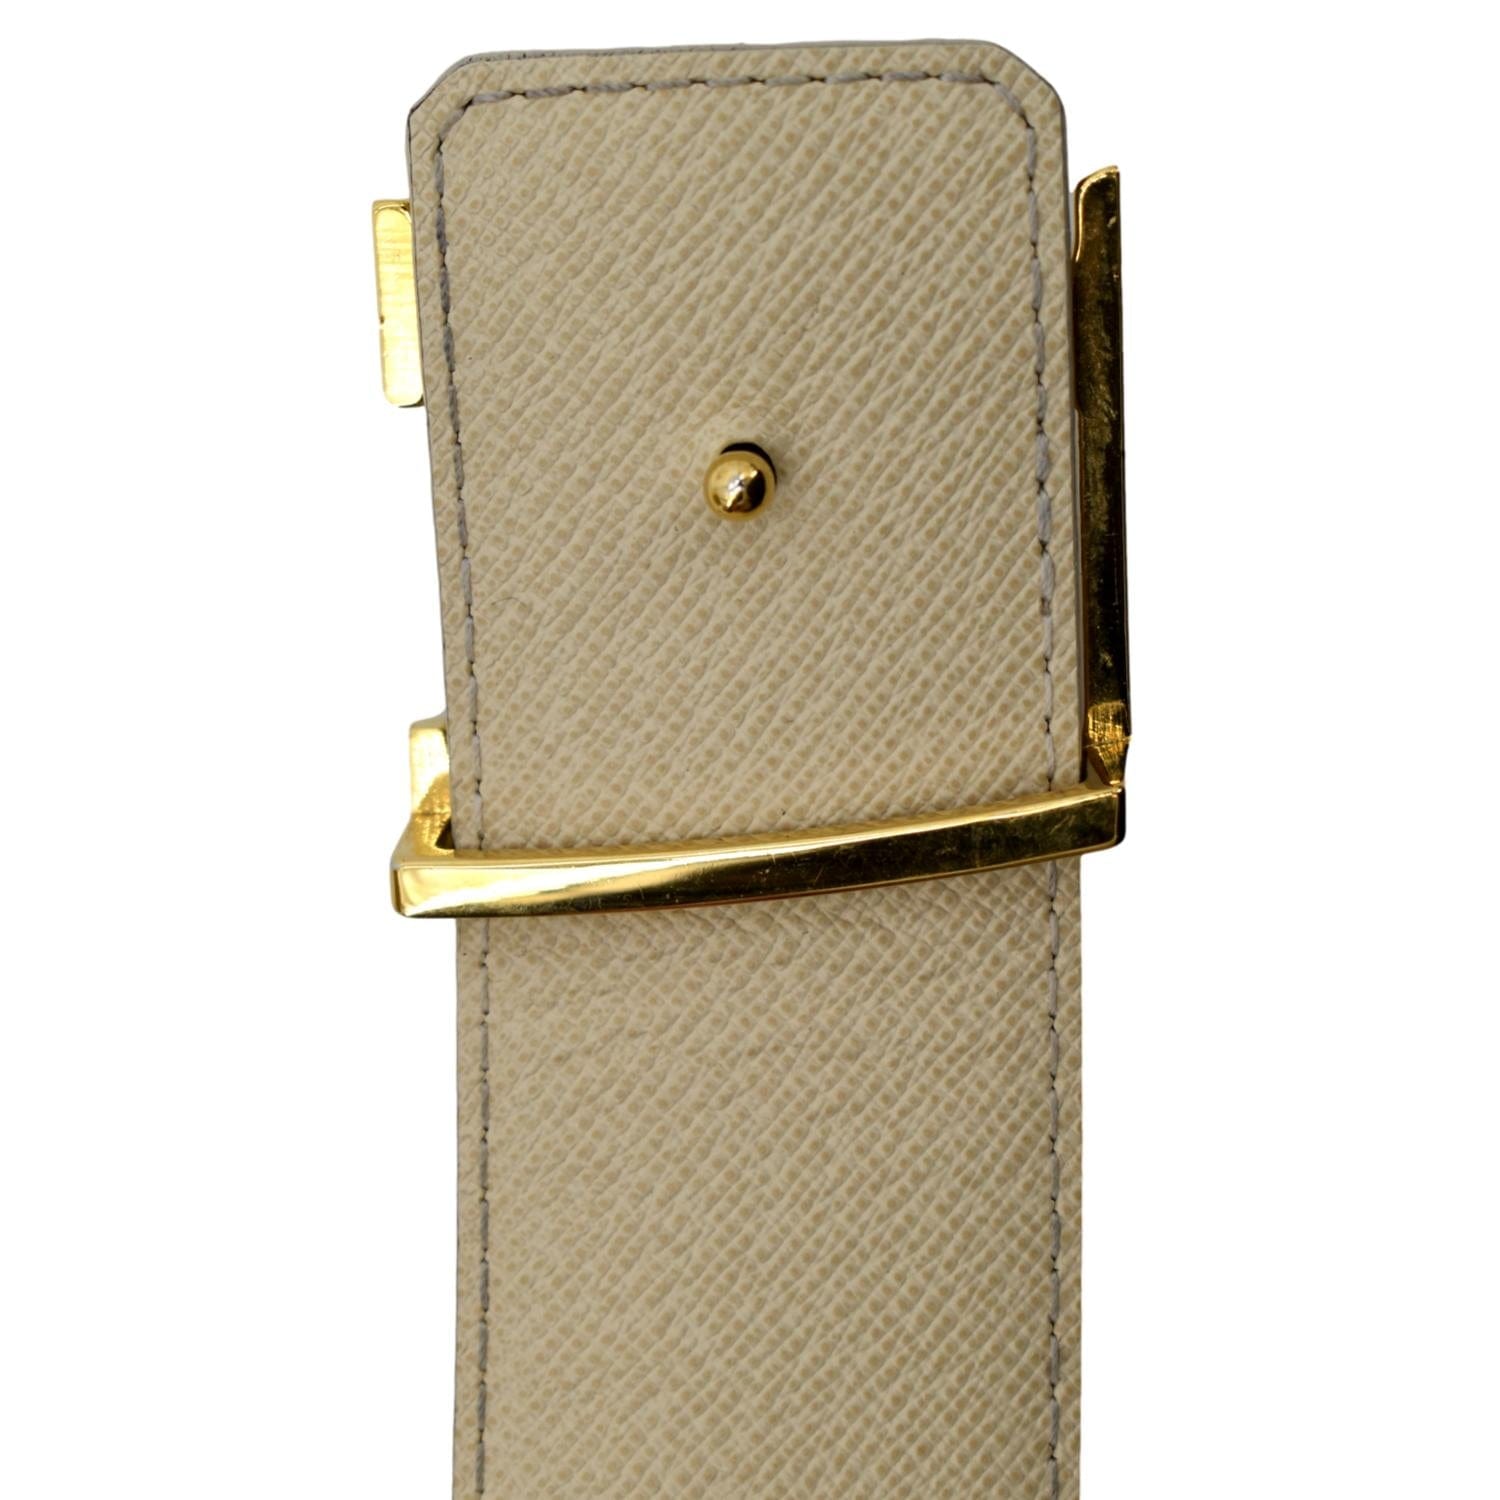 Louis Vuitton Lv checkered cream and gold belt